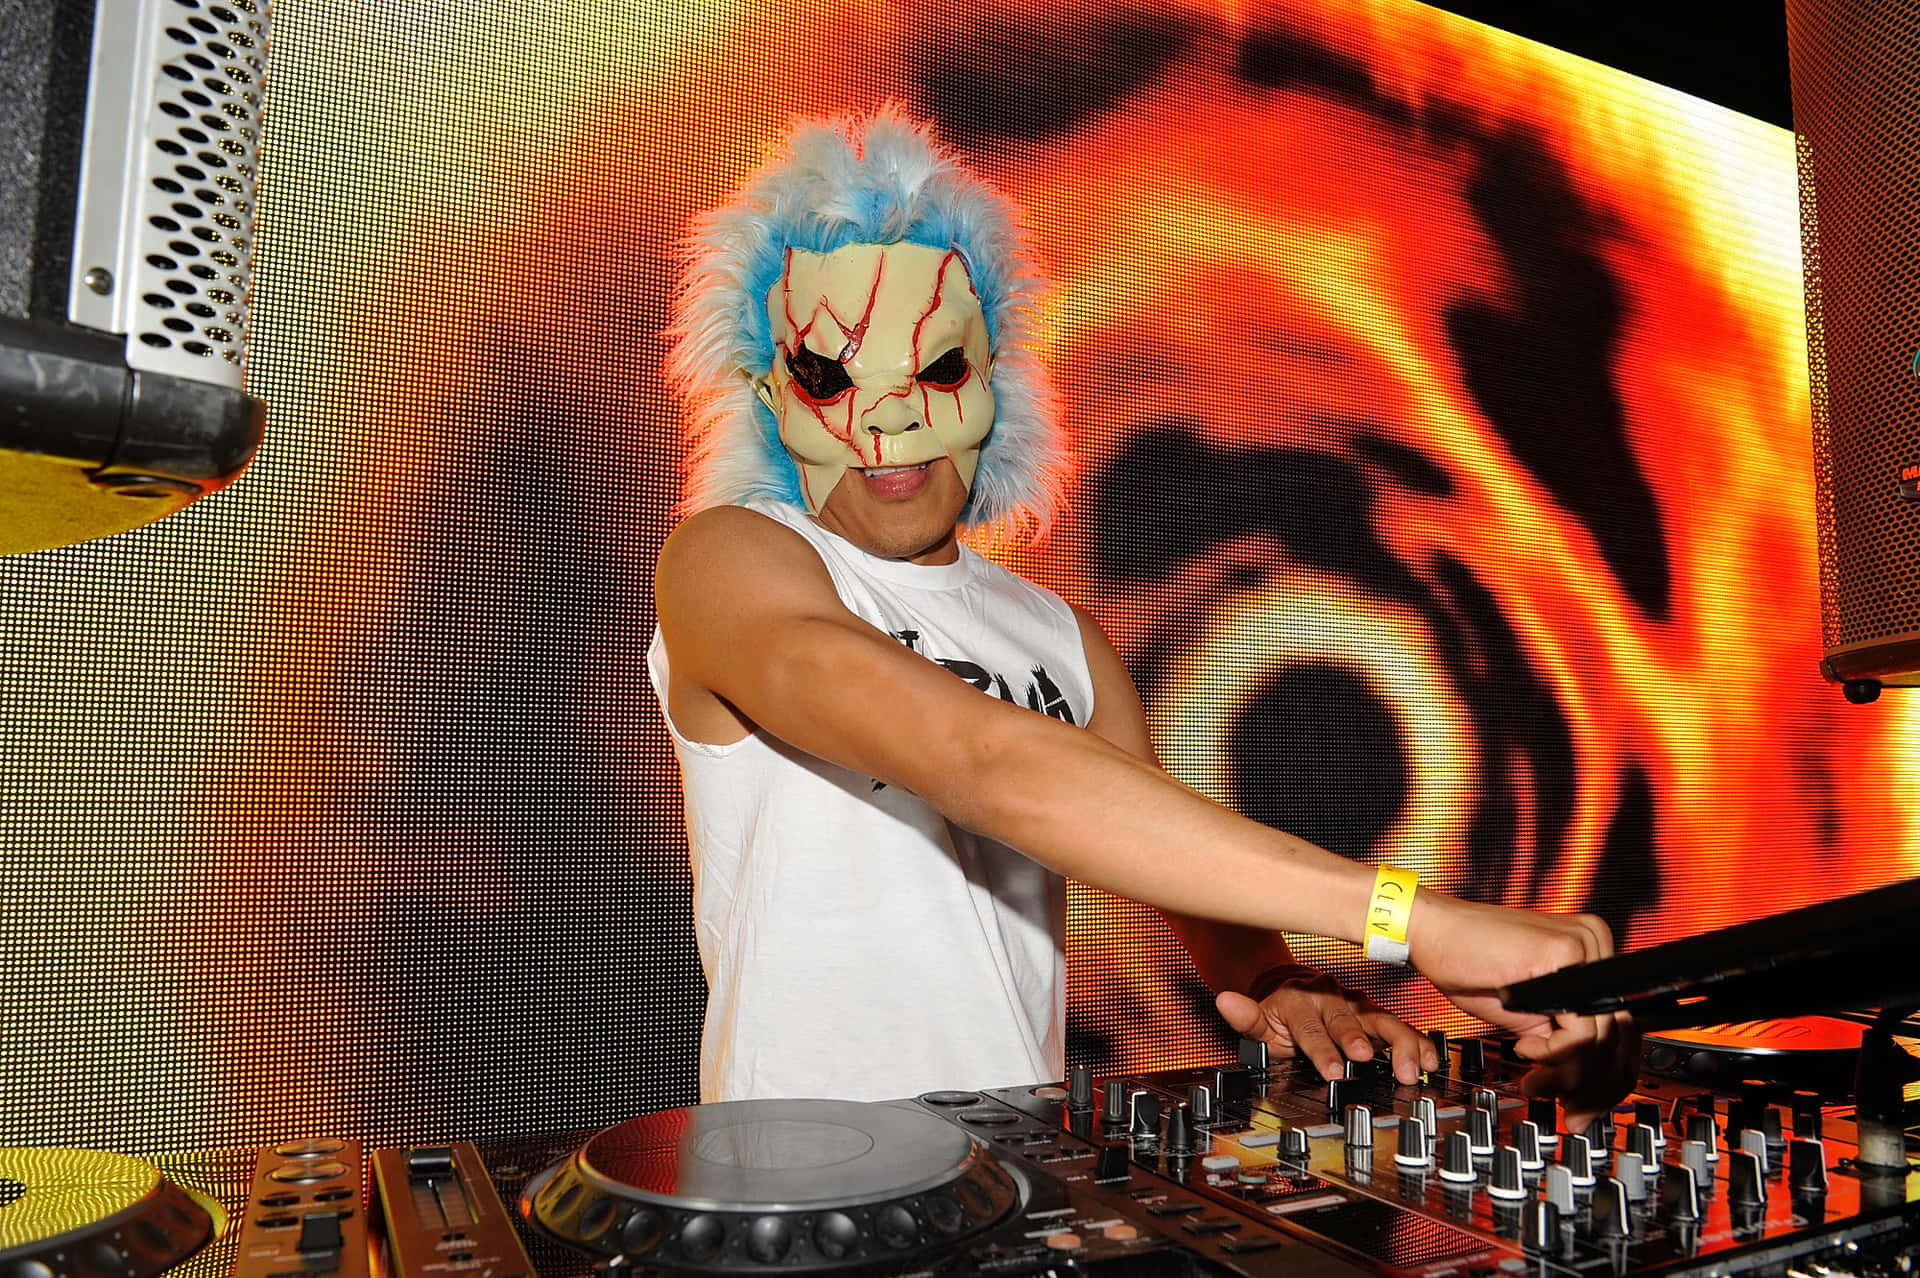 Captivating DJ Mixing at a Nightclub